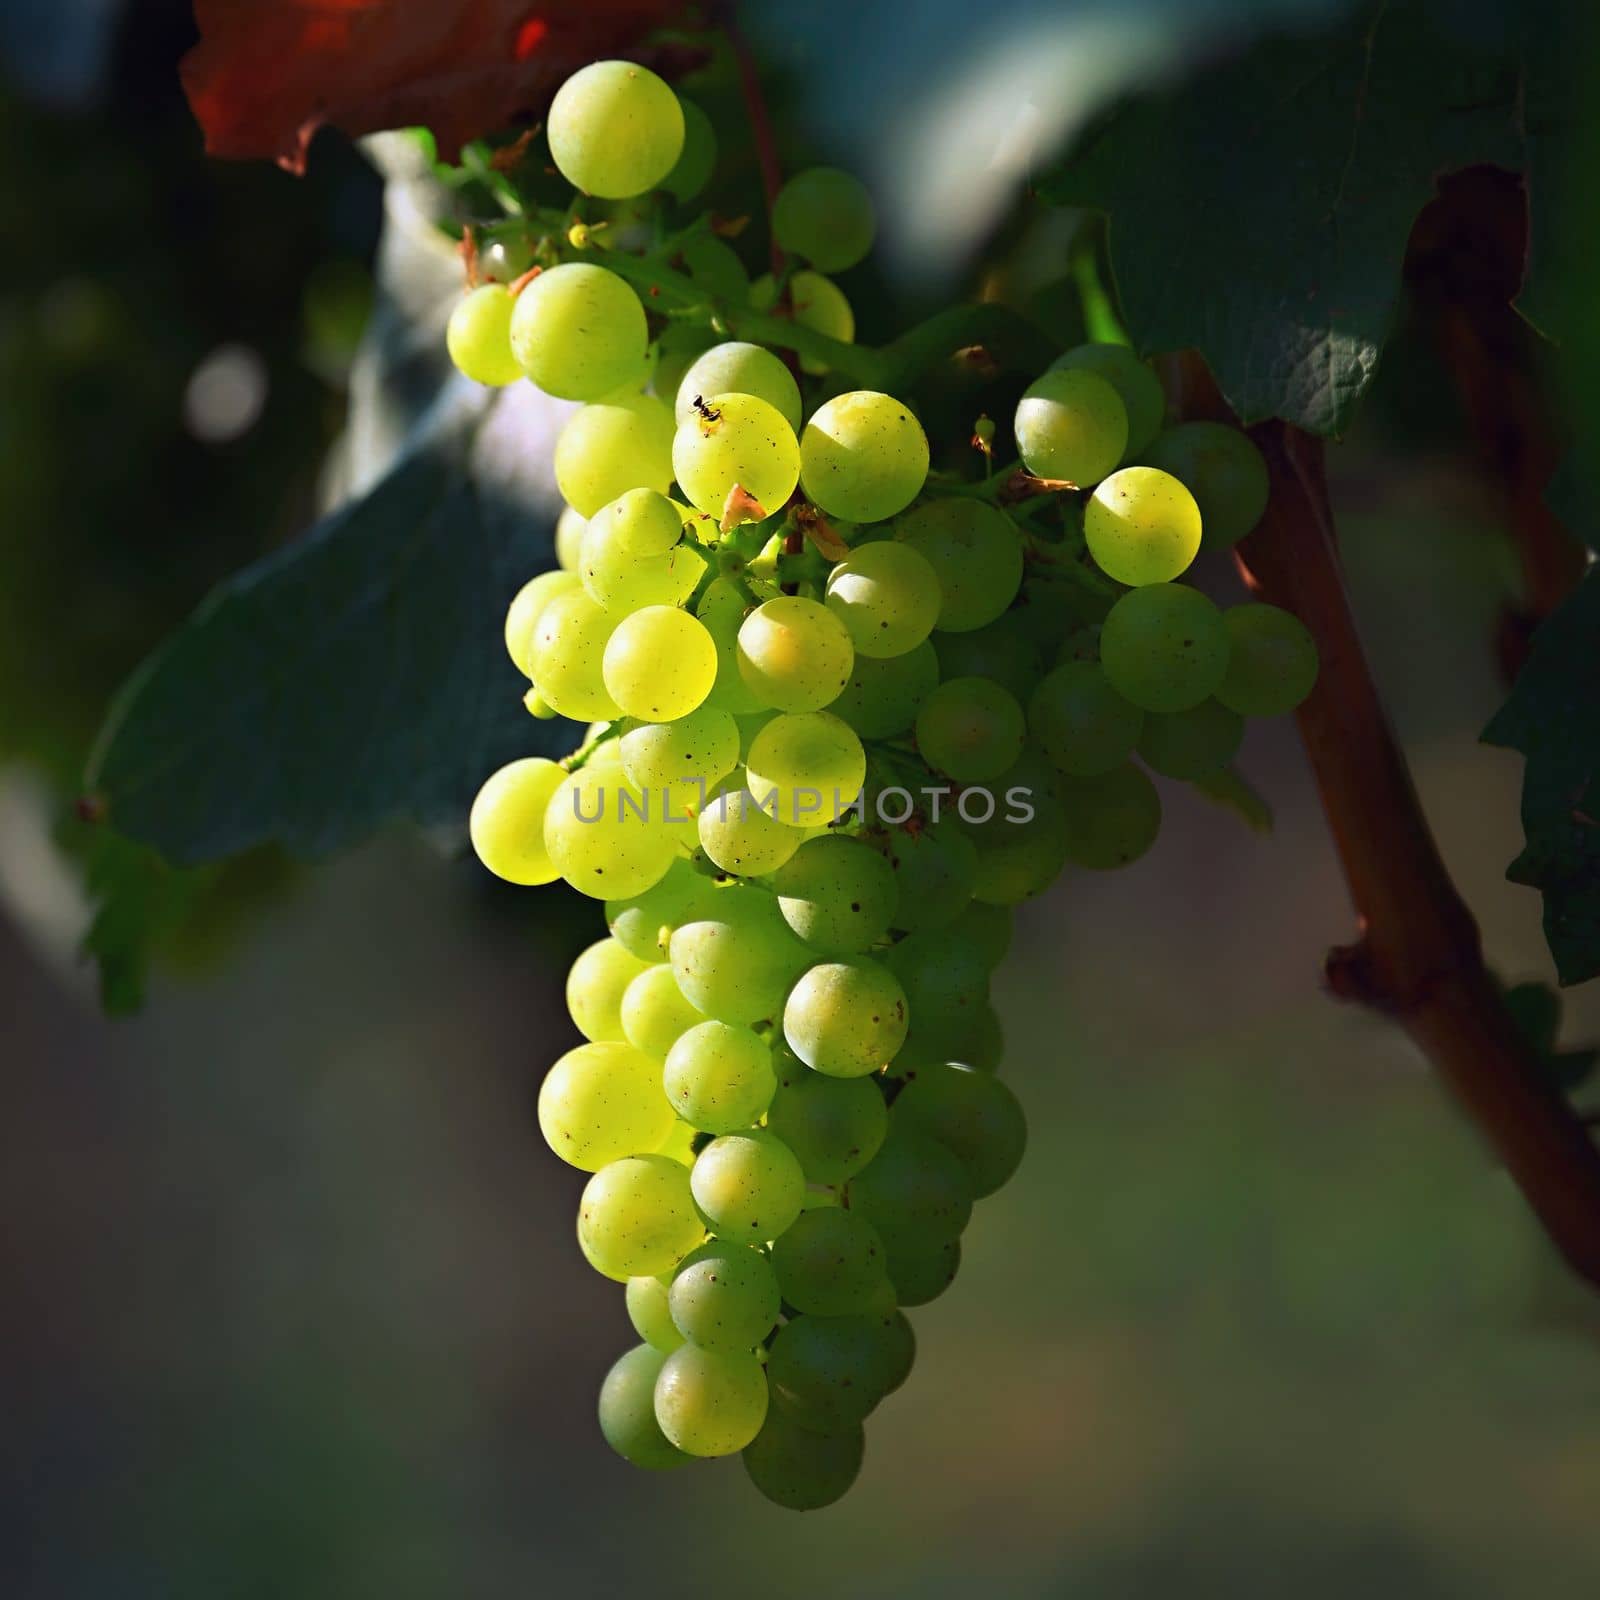 Beautiful fresh fruit - grapes growing in a vineyard. Harvest time - autumn fruit collection. South Moravian wine region - Palava - Czech Republic.